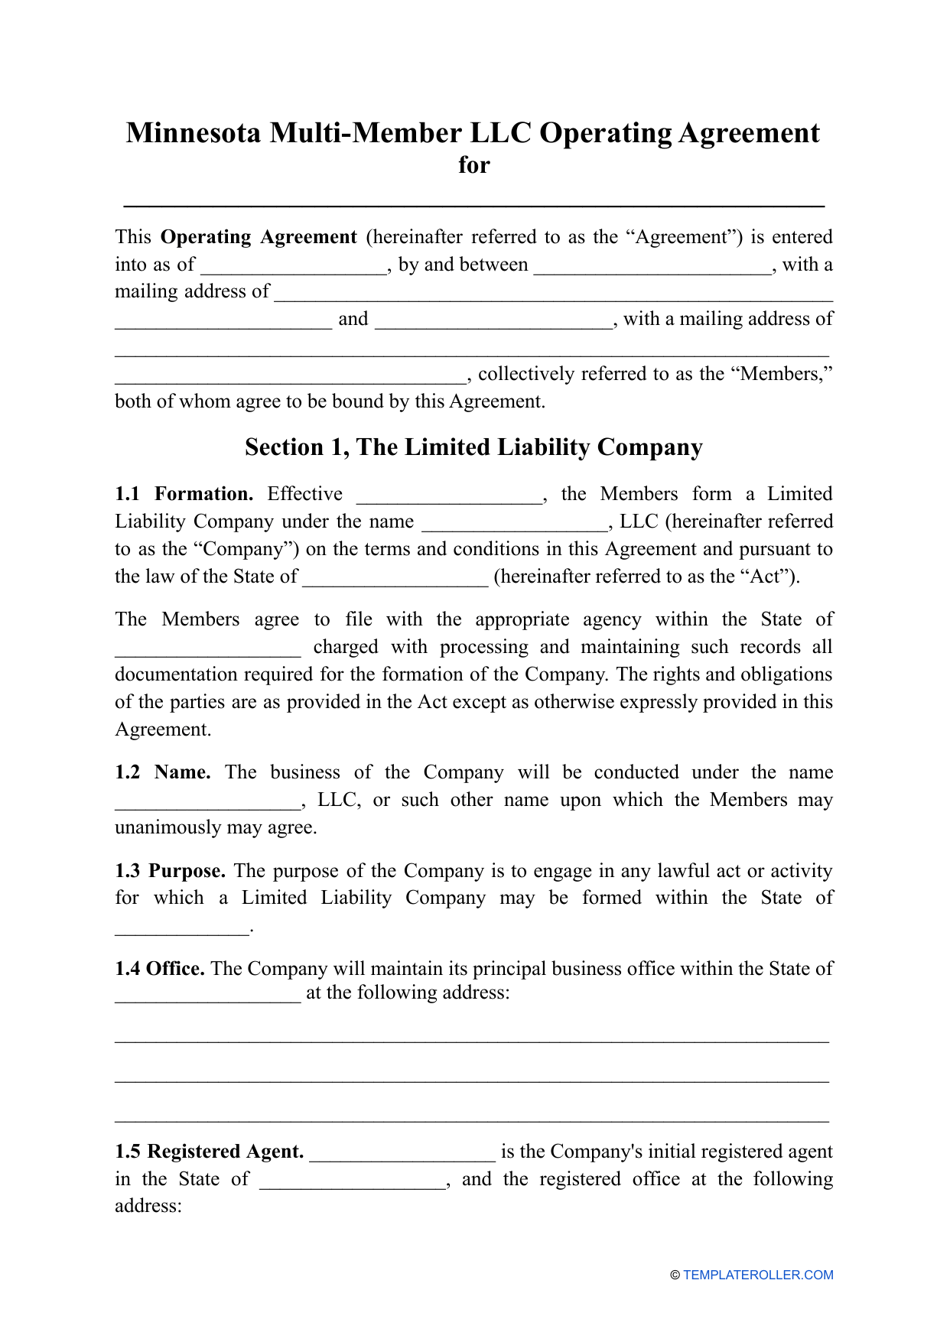 Multi-Member LLC Operating Agreement Template - Minnesota, Page 1